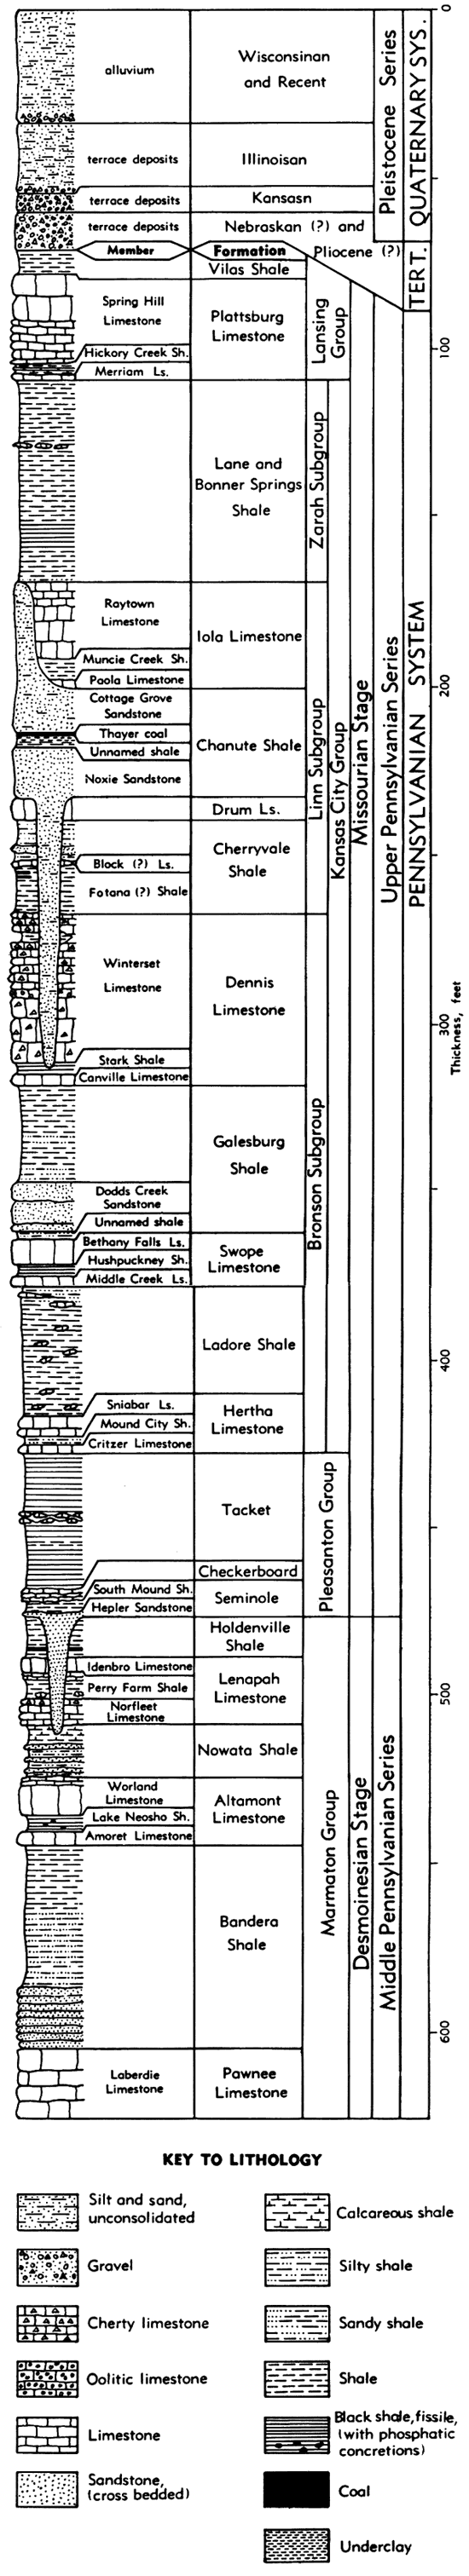 From base--Marmaton Gp, Pleasanton Gp, Kansas City Gp, Lansing Gp, Tertiary terrace deposits, Pleistocene terrace deposits and alluvium.